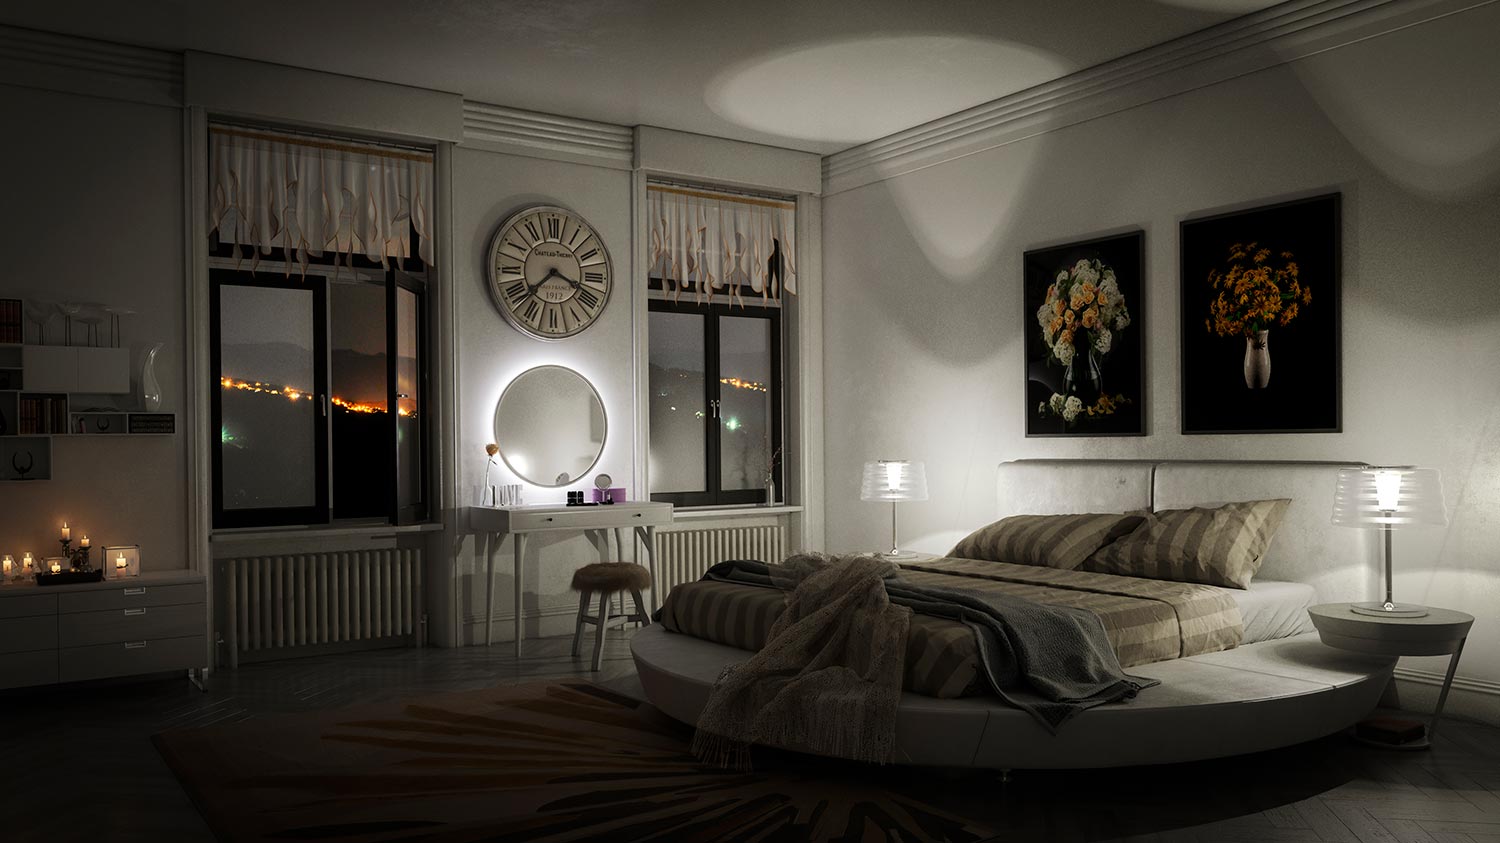 Digitally generated luxurious domestic bedroom interior (night scene)